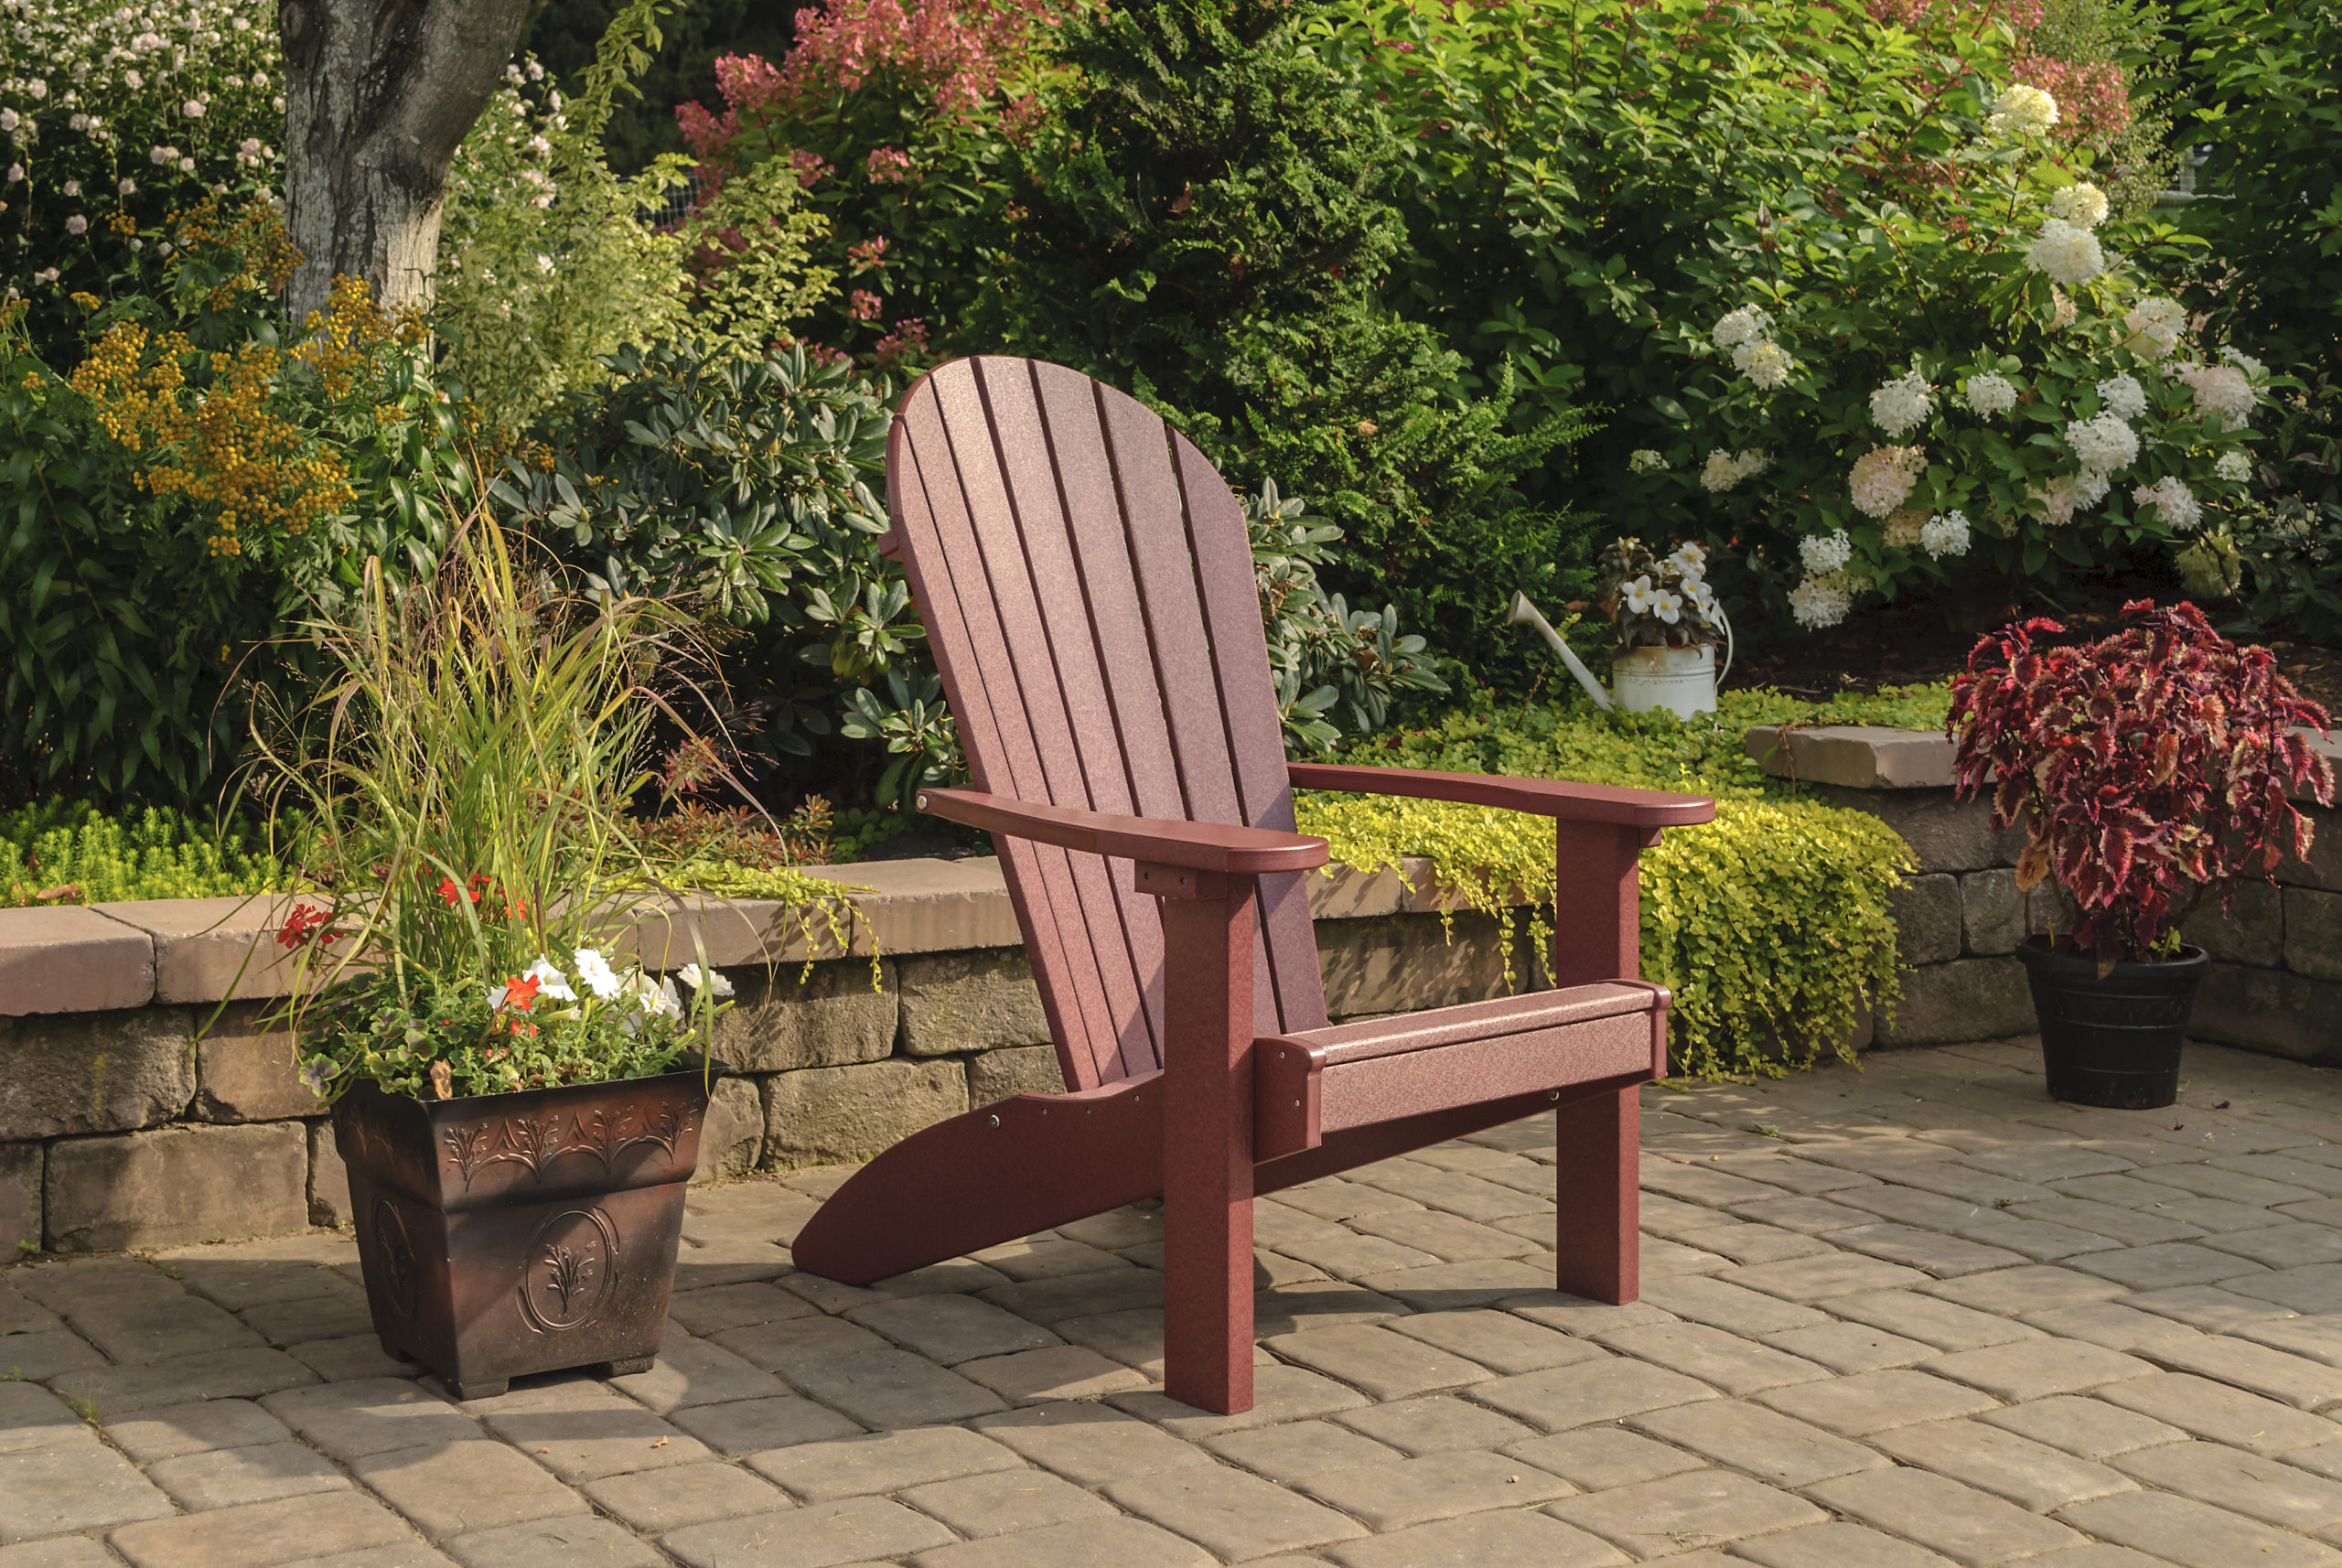 Backyard patio and maroon poly Adirondack chair.